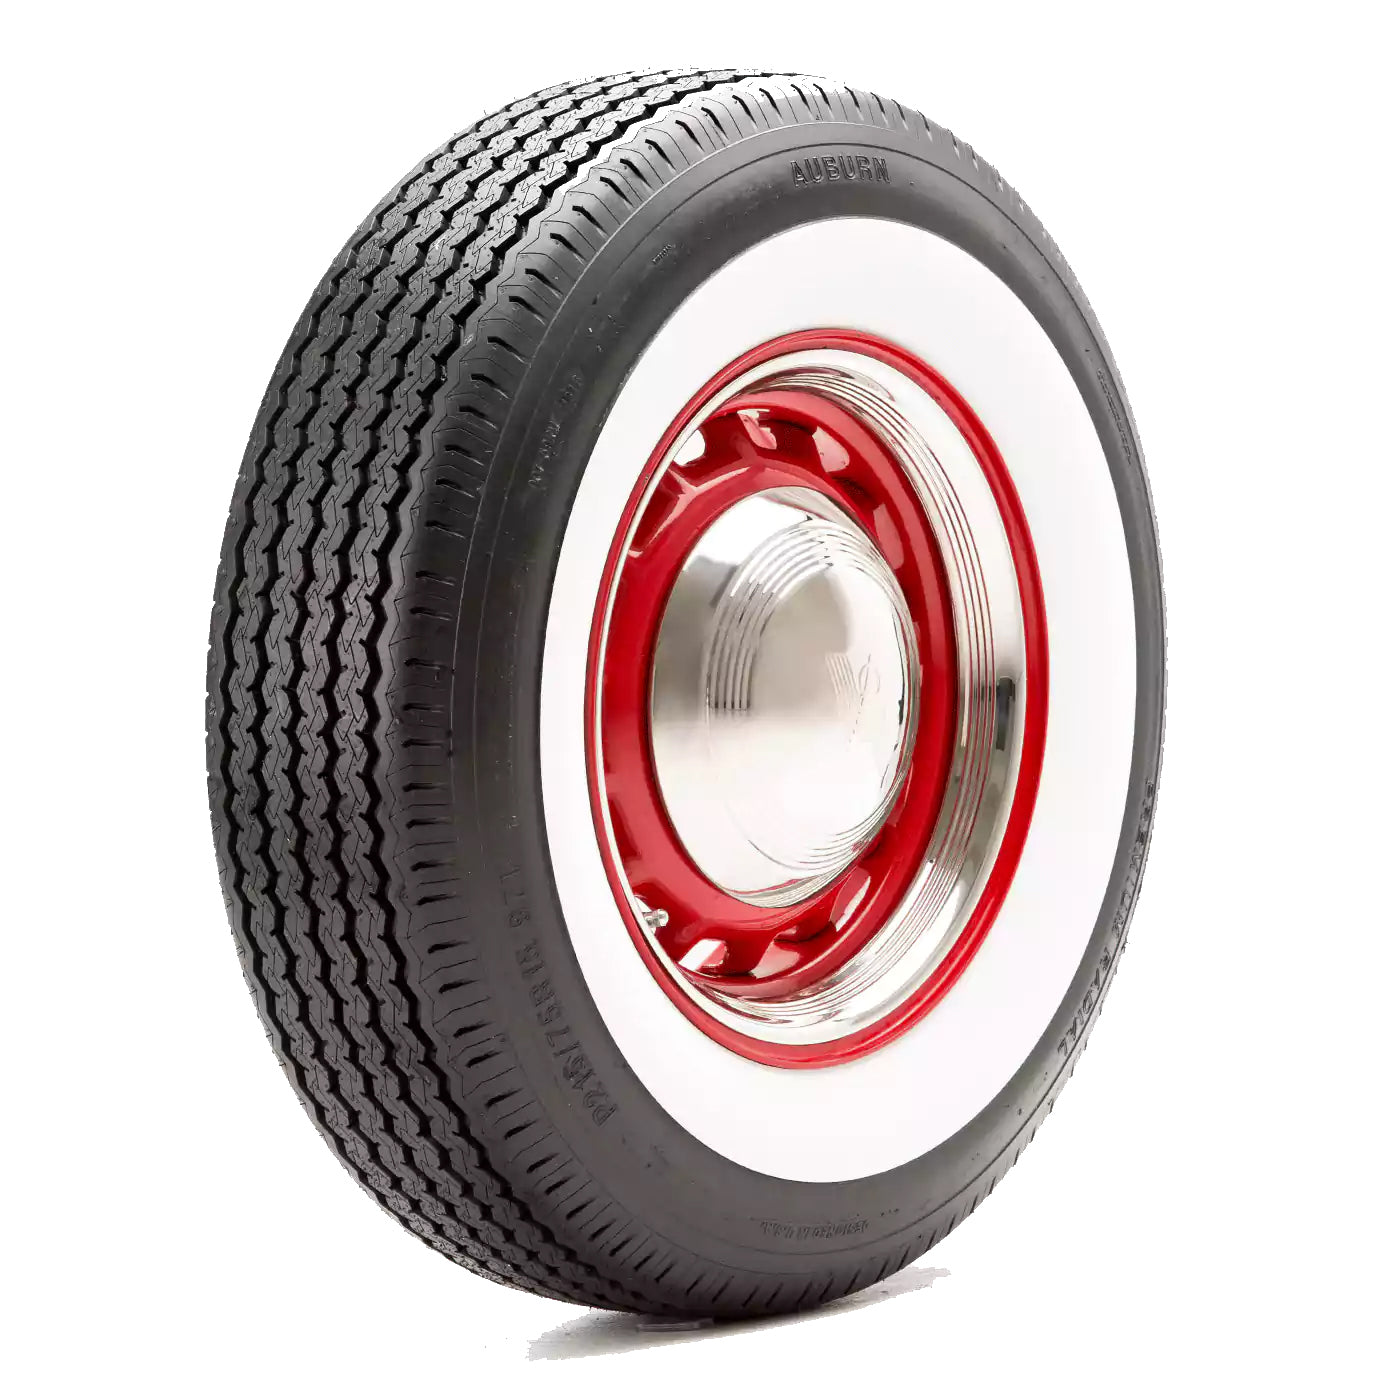 Auburn Radial 3 1/4" Whitewall Tyre - 215/75R15